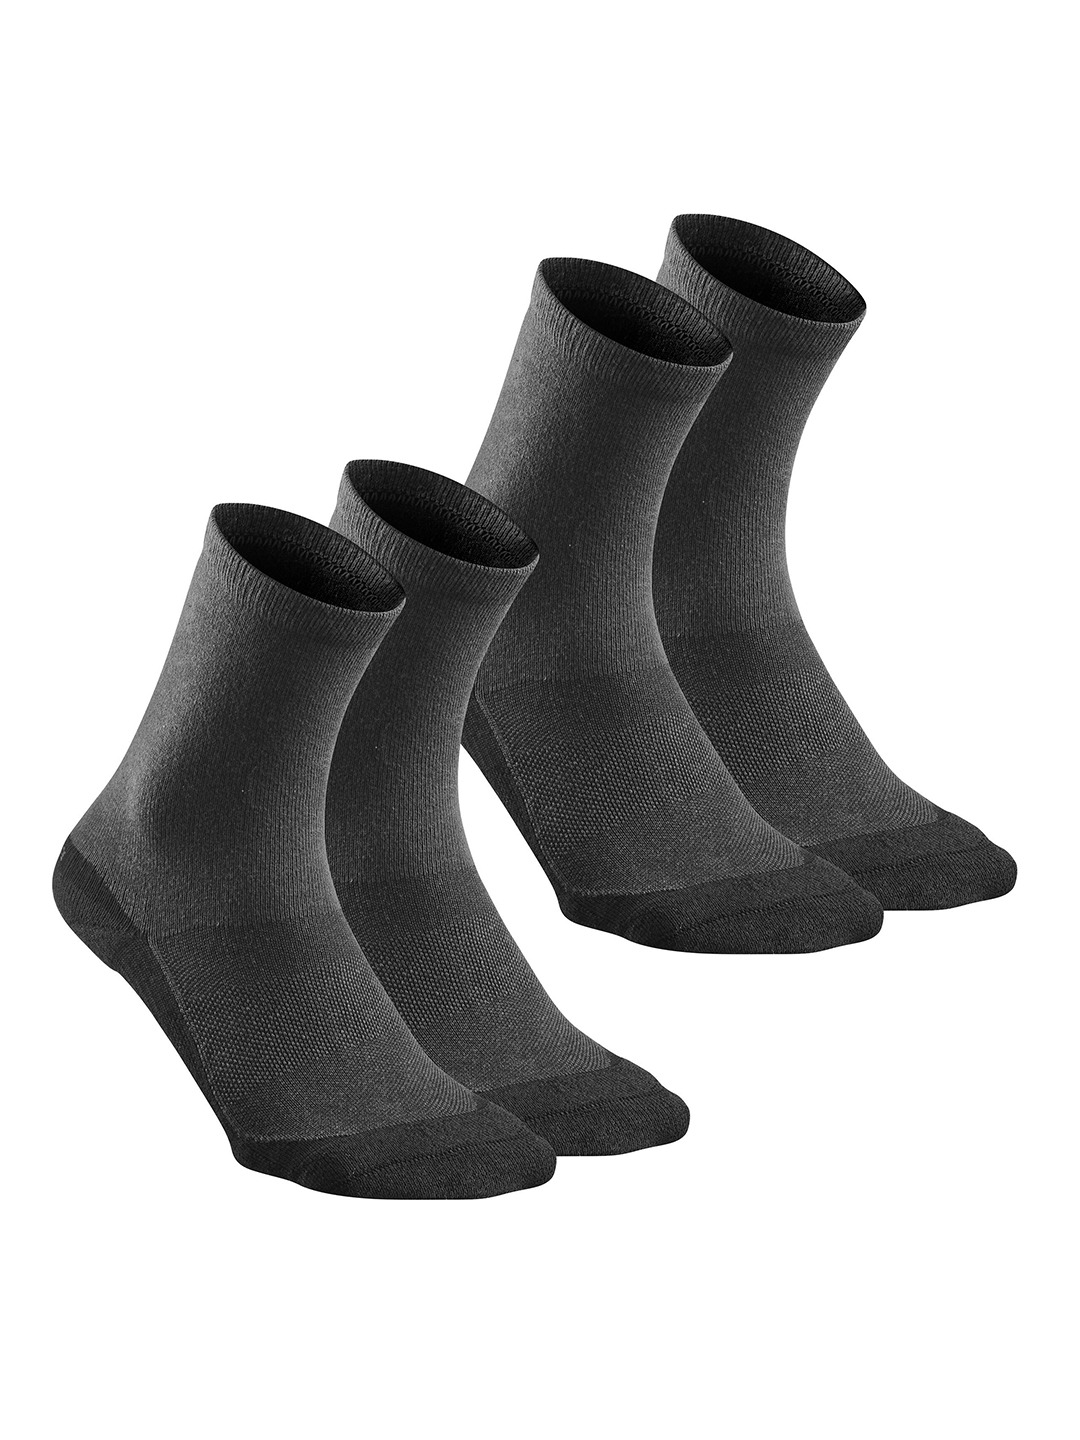 Accessories Socks | Quechua By Decathlon Pack of 2 Grey Hike Socks - CU13797